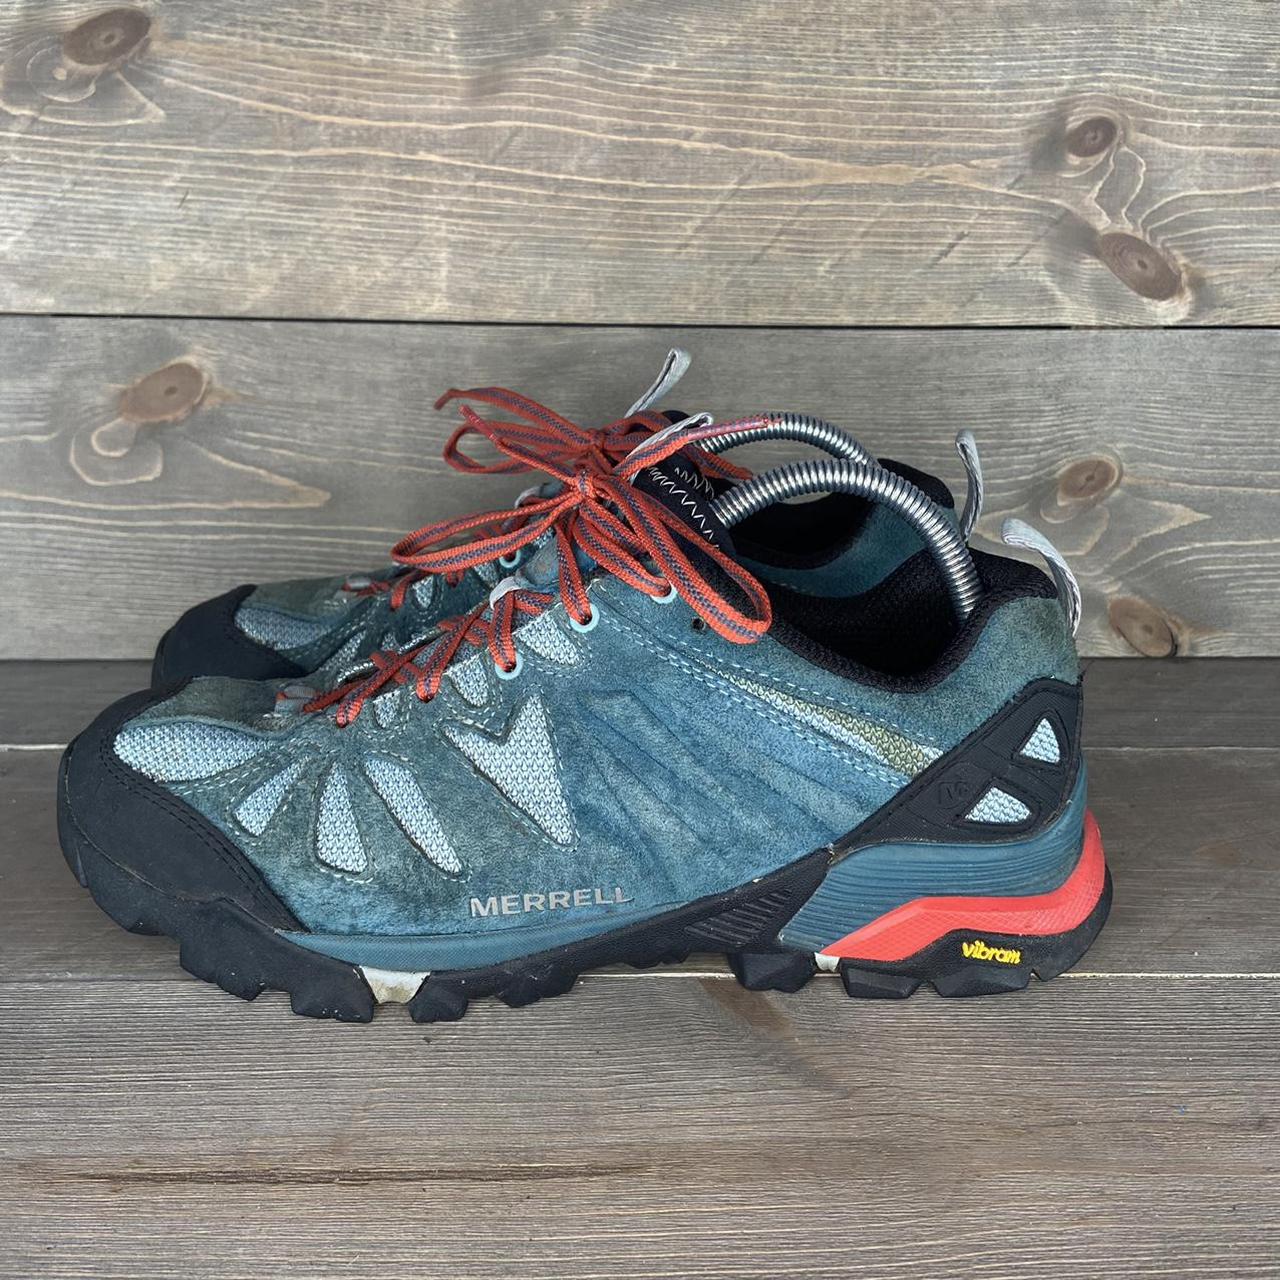 Product Image 1 - Merrell Capra hiking shoes

Women’s size